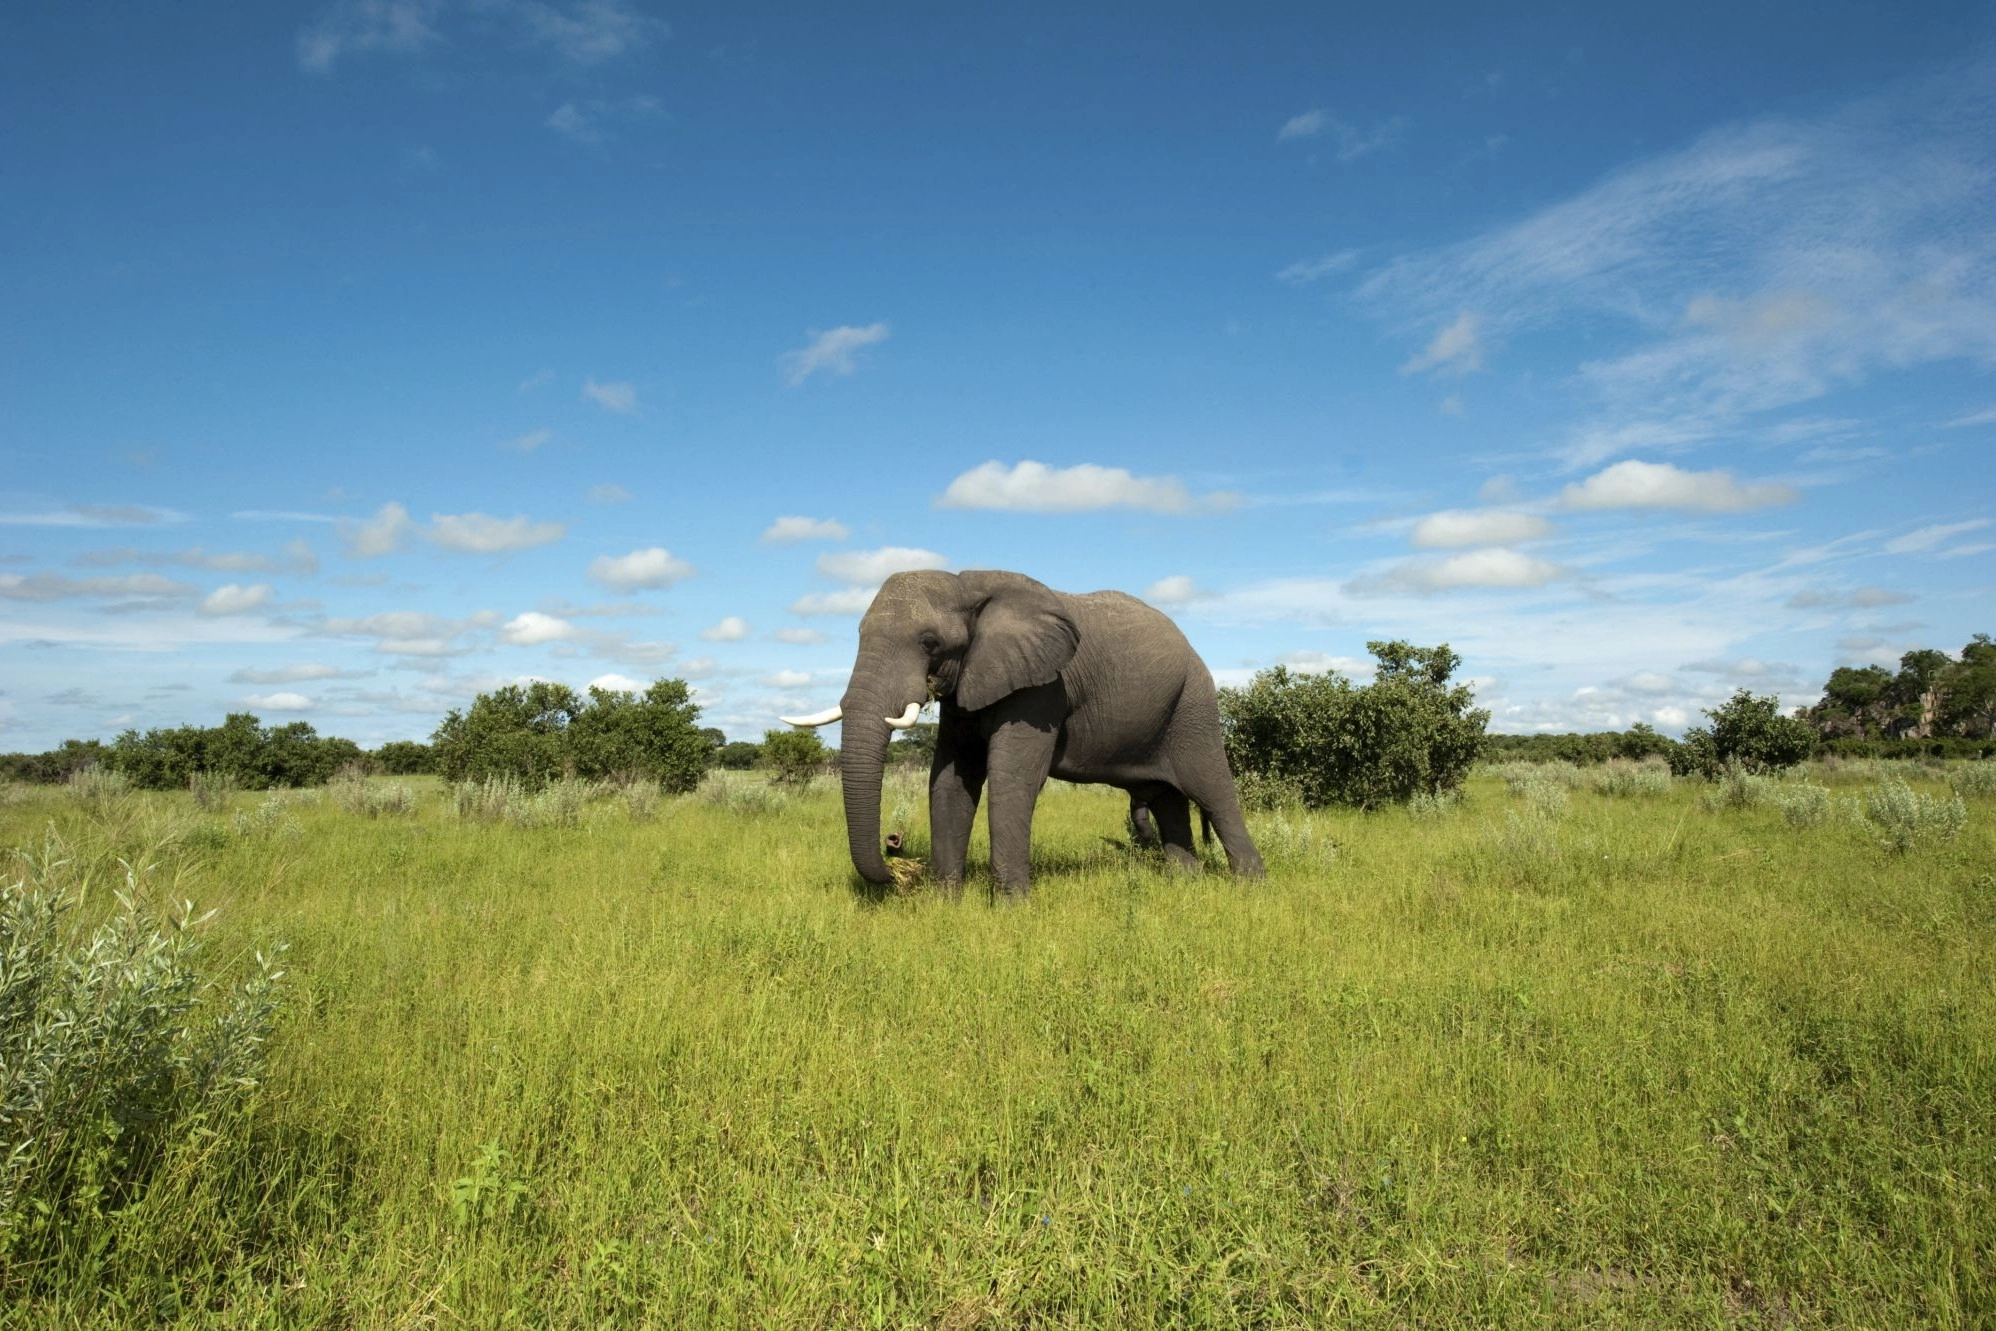 An elephant in Chobe National Park, Botswana